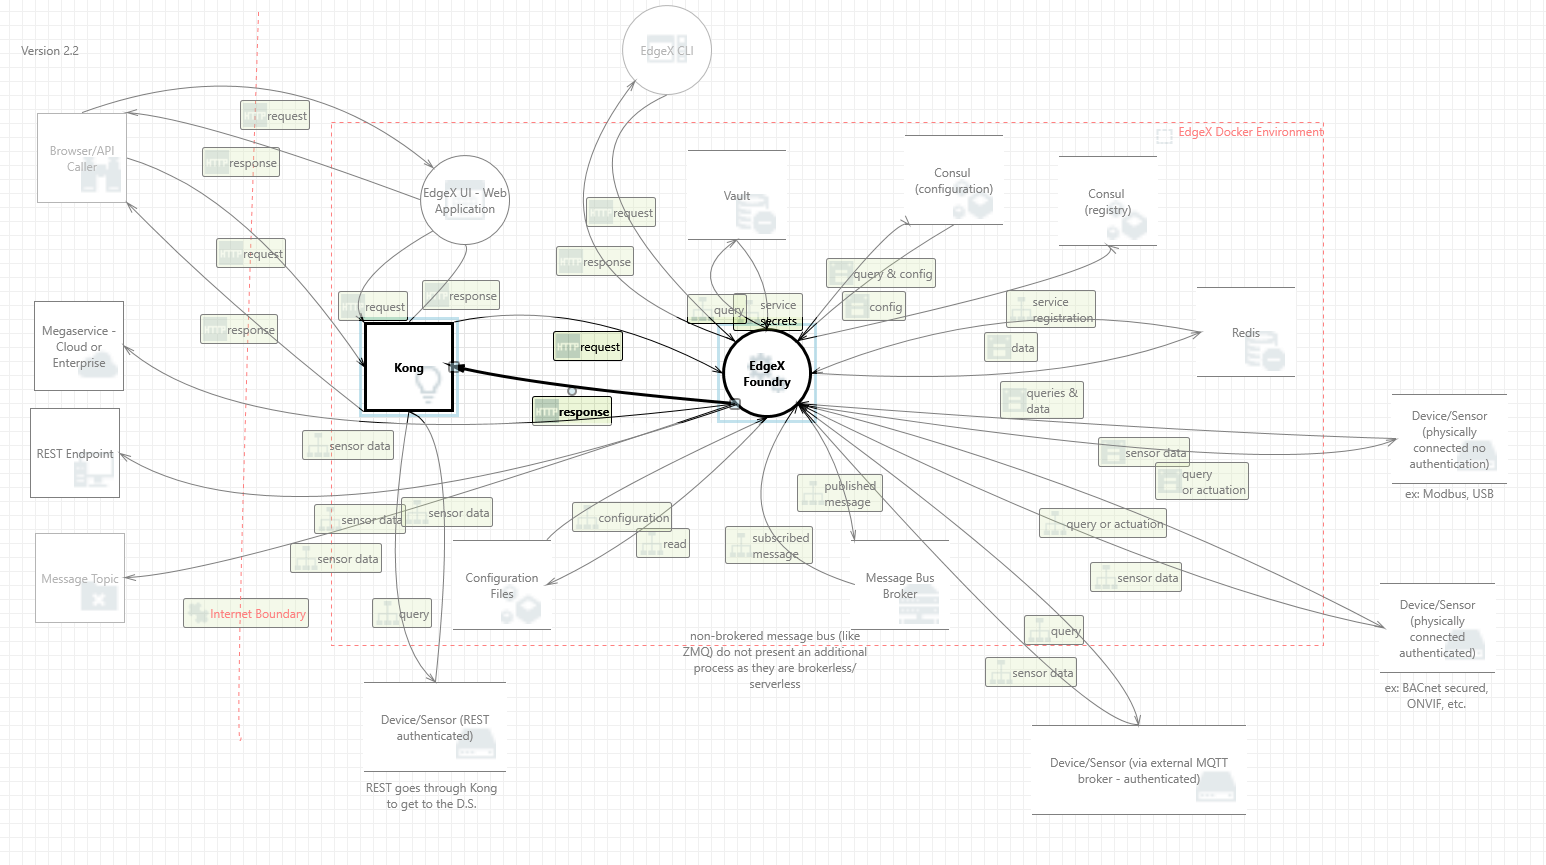 EdgeX Foundry (Big Picture) diagram
screenshot